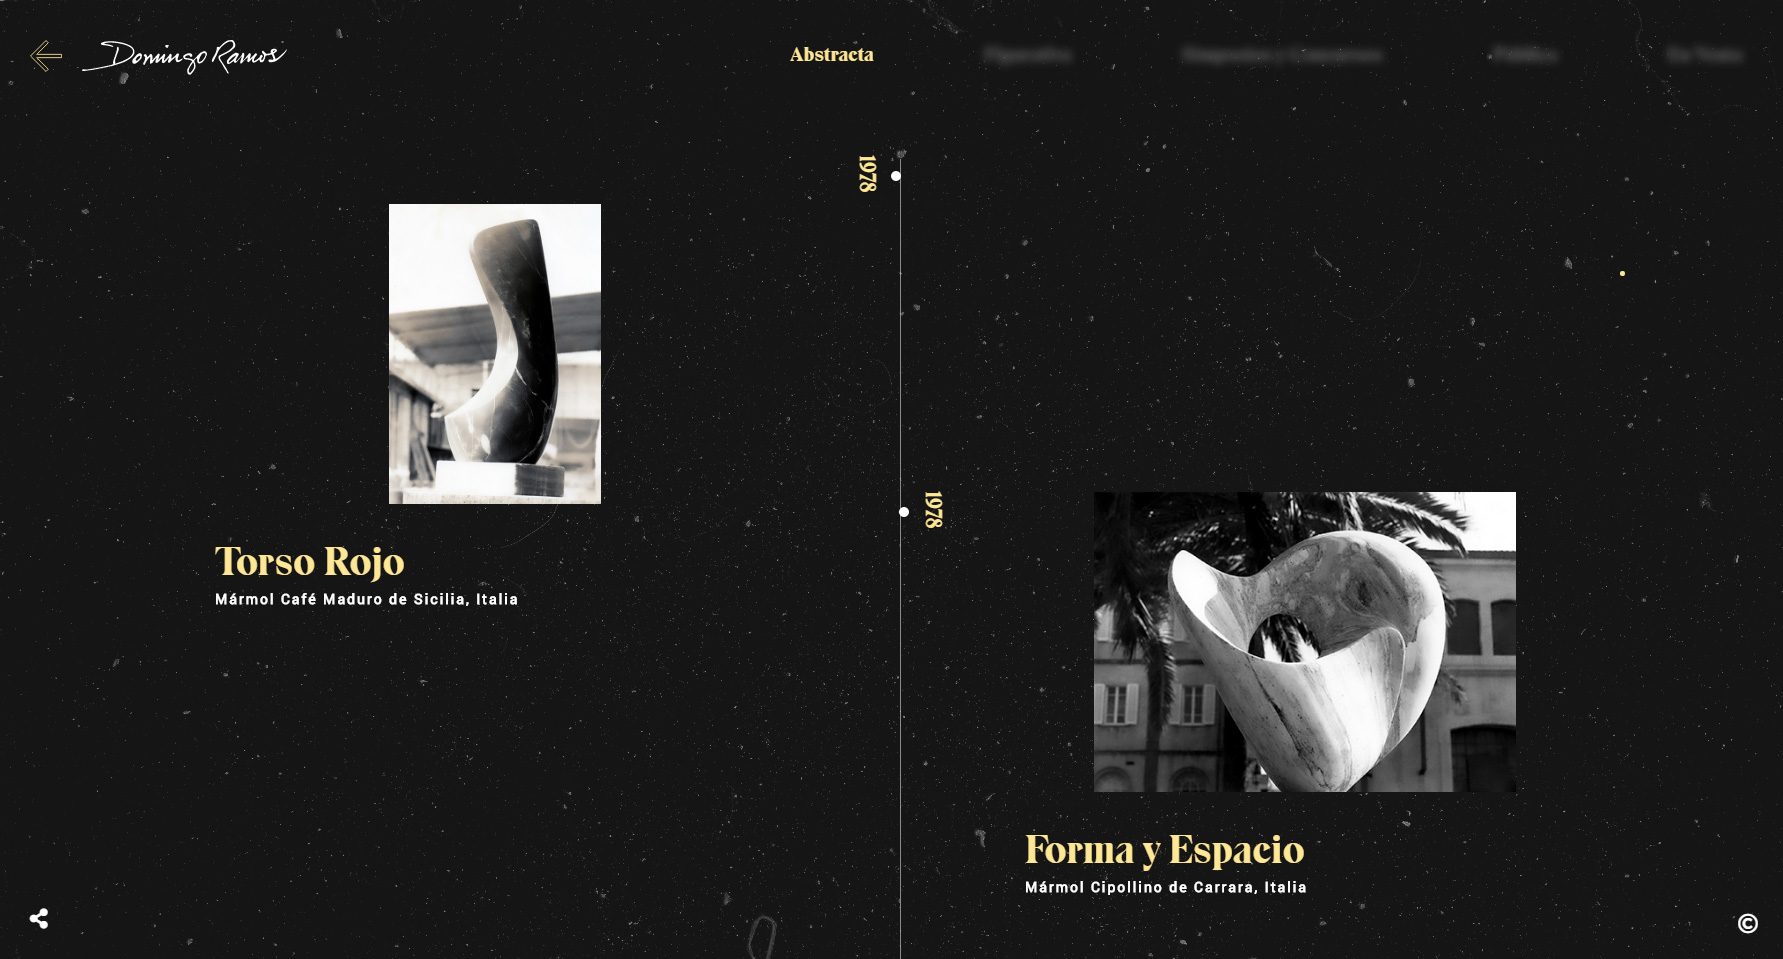 Escultor Domingo Ramos - Website of the Day